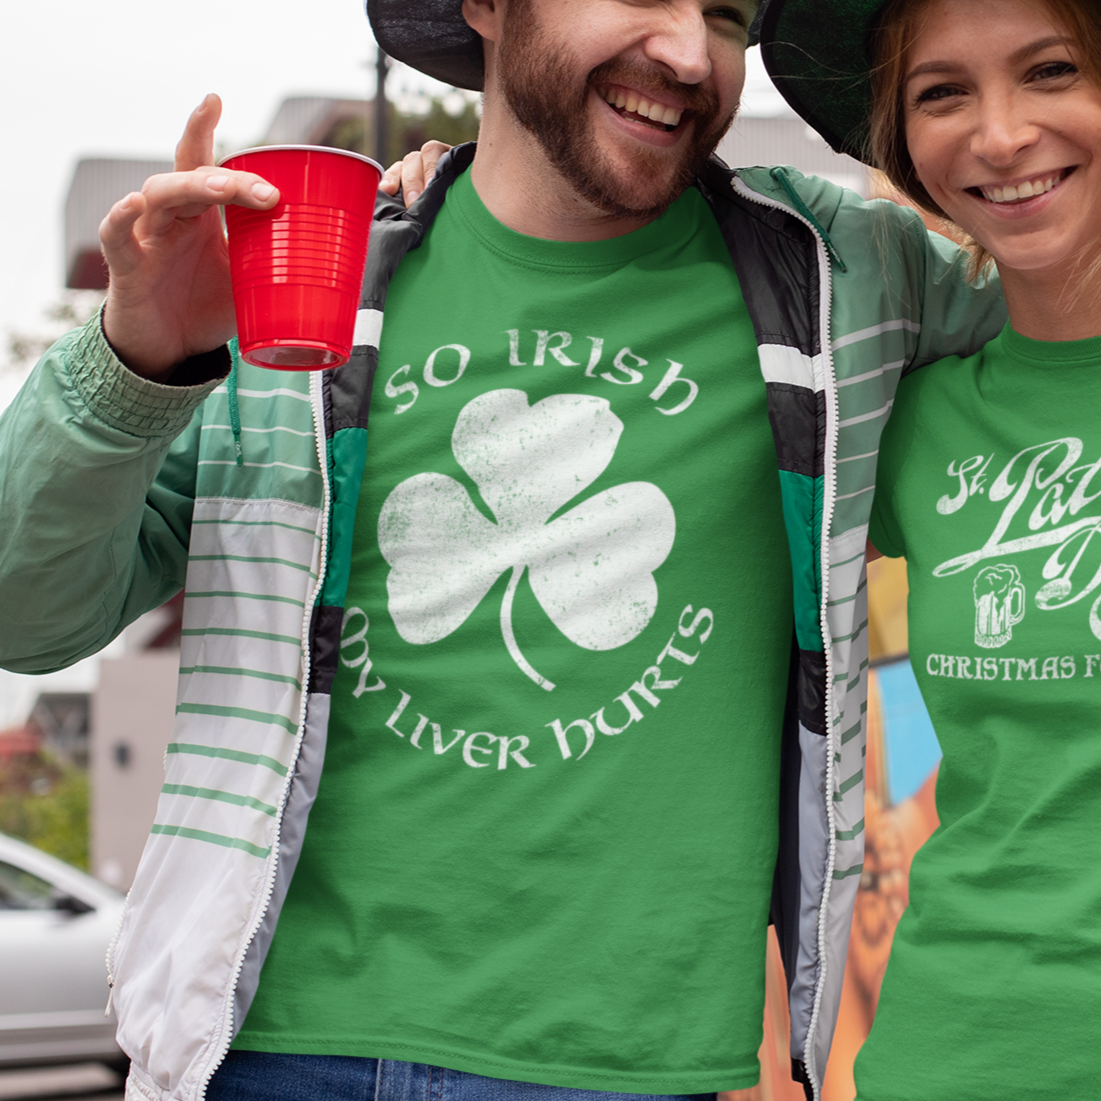 So Irish My Liver Hurts Pre-Distressed T-Shirt